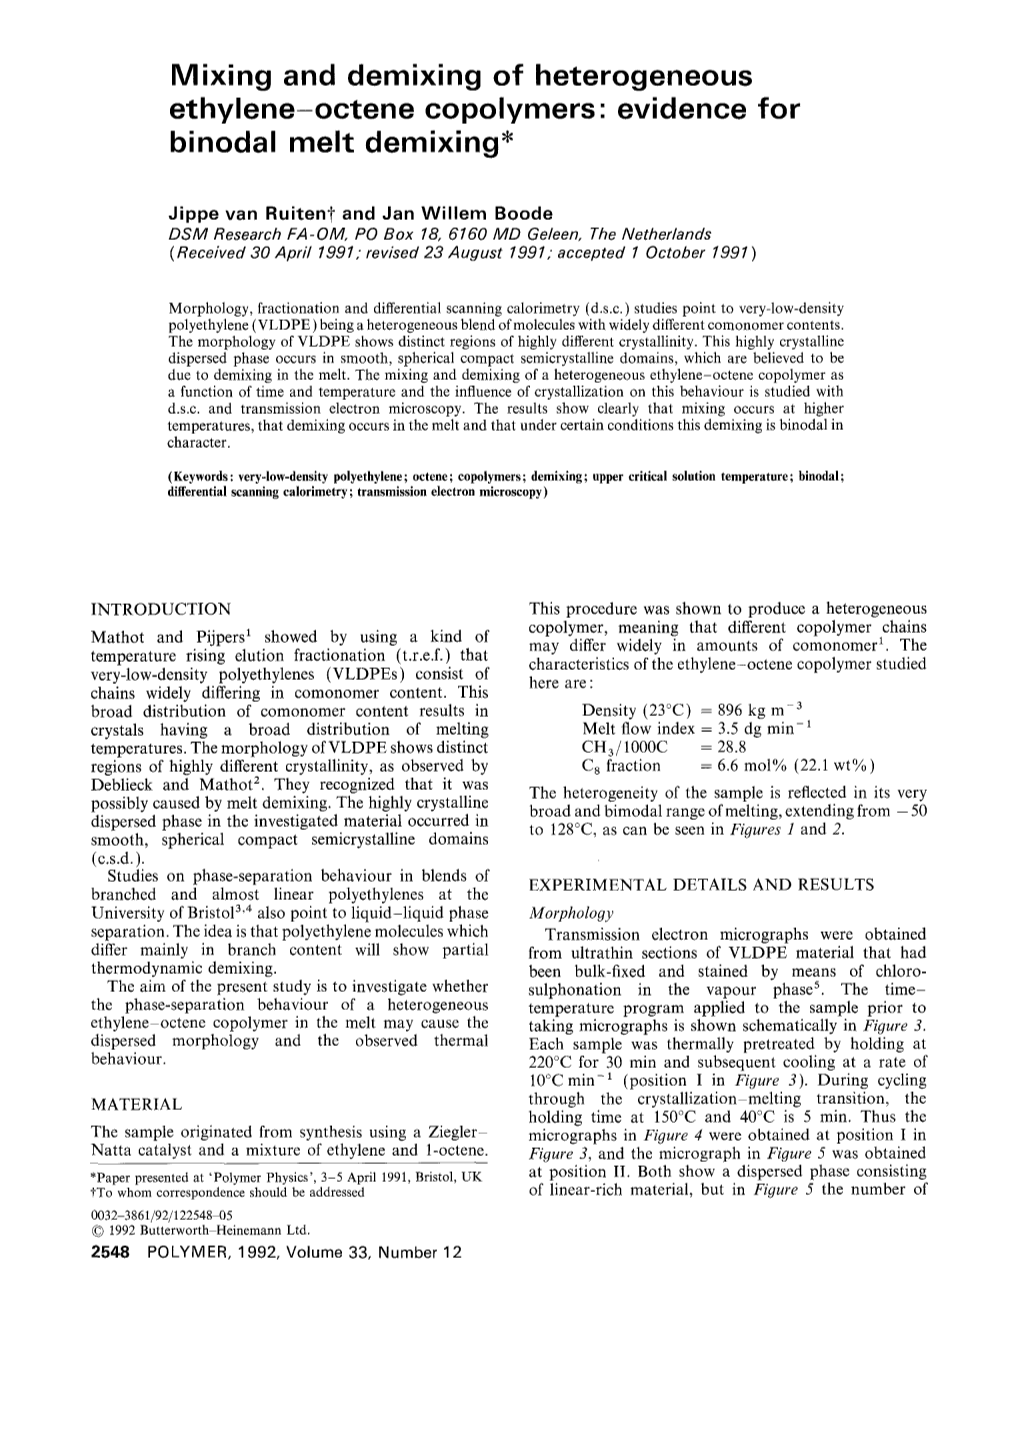 Mixing and Demixing of Heterogeneous Ethylene-Octene Copolymers: Evidence for Binodal Melt Demixing*